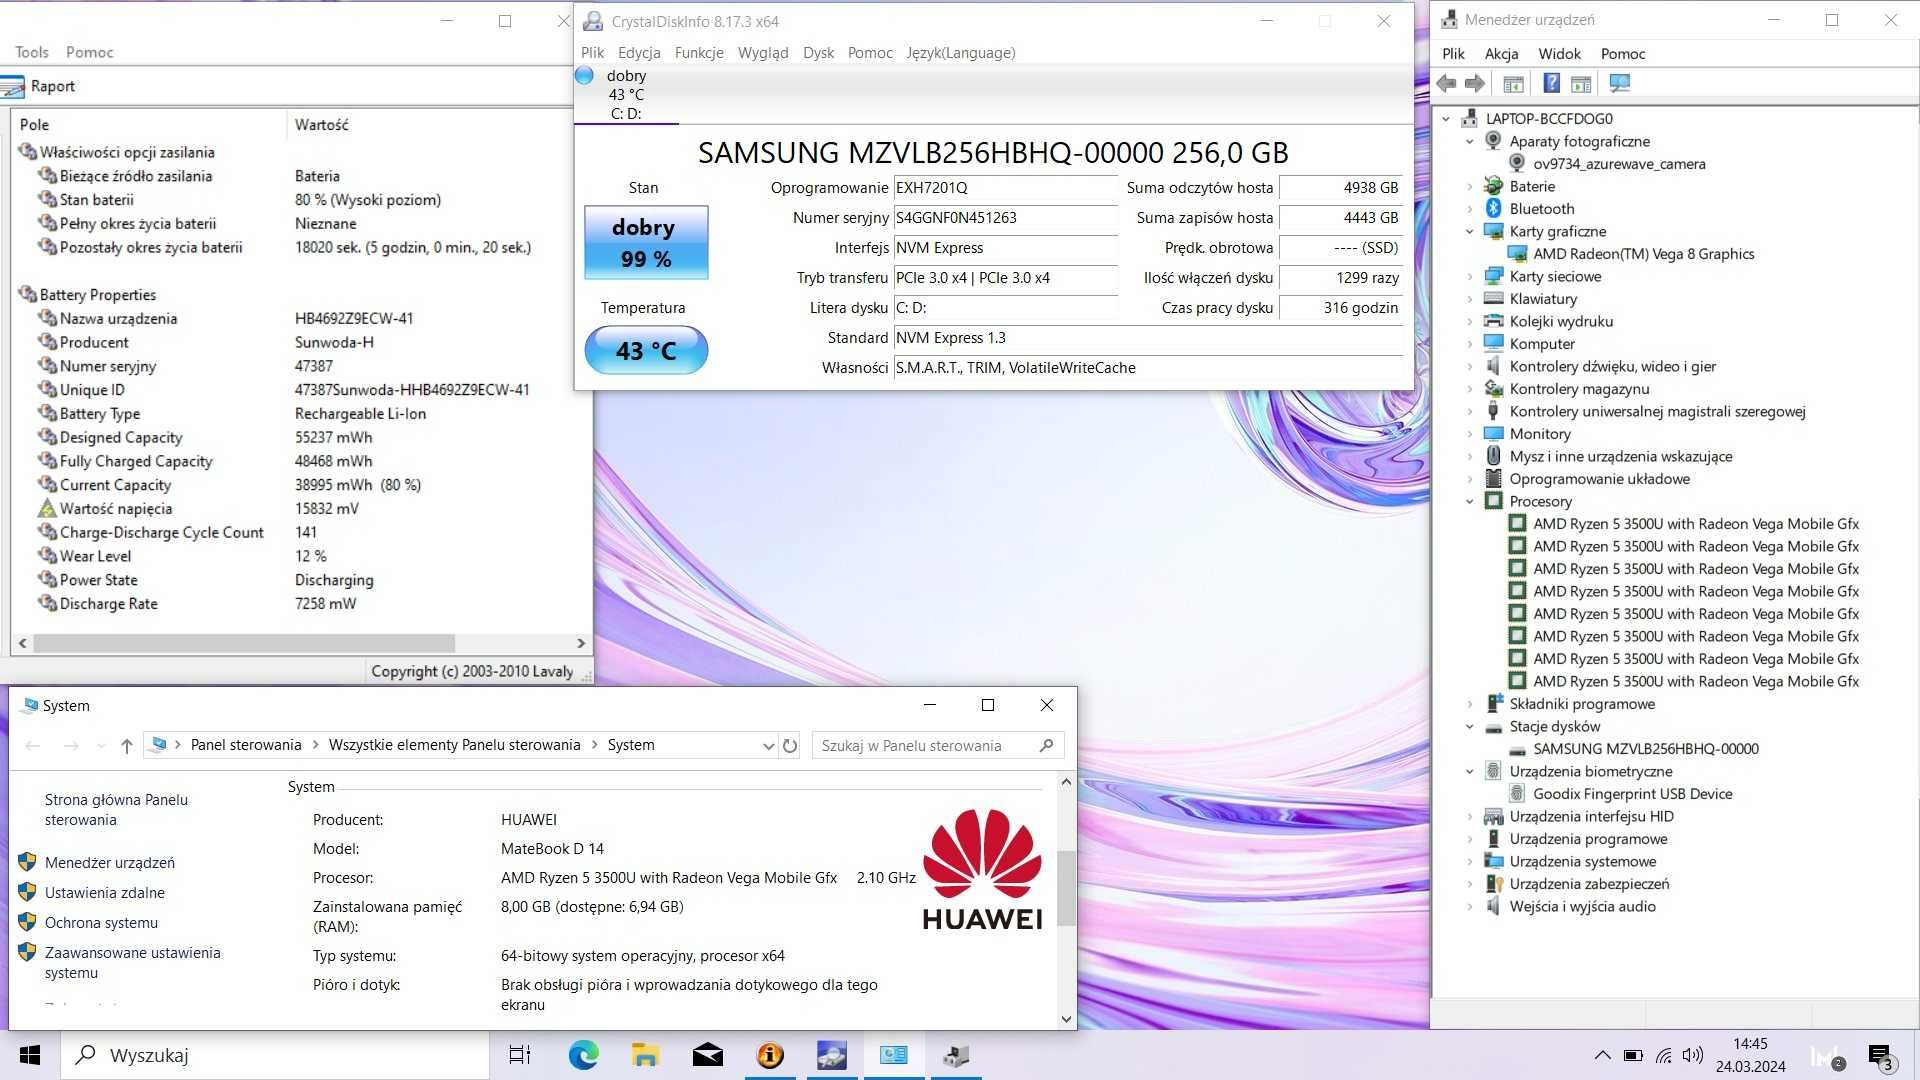 Huawei Matebook D14 Ryzen 5 3500u 8GB 256SSD IPS USB-C Win10